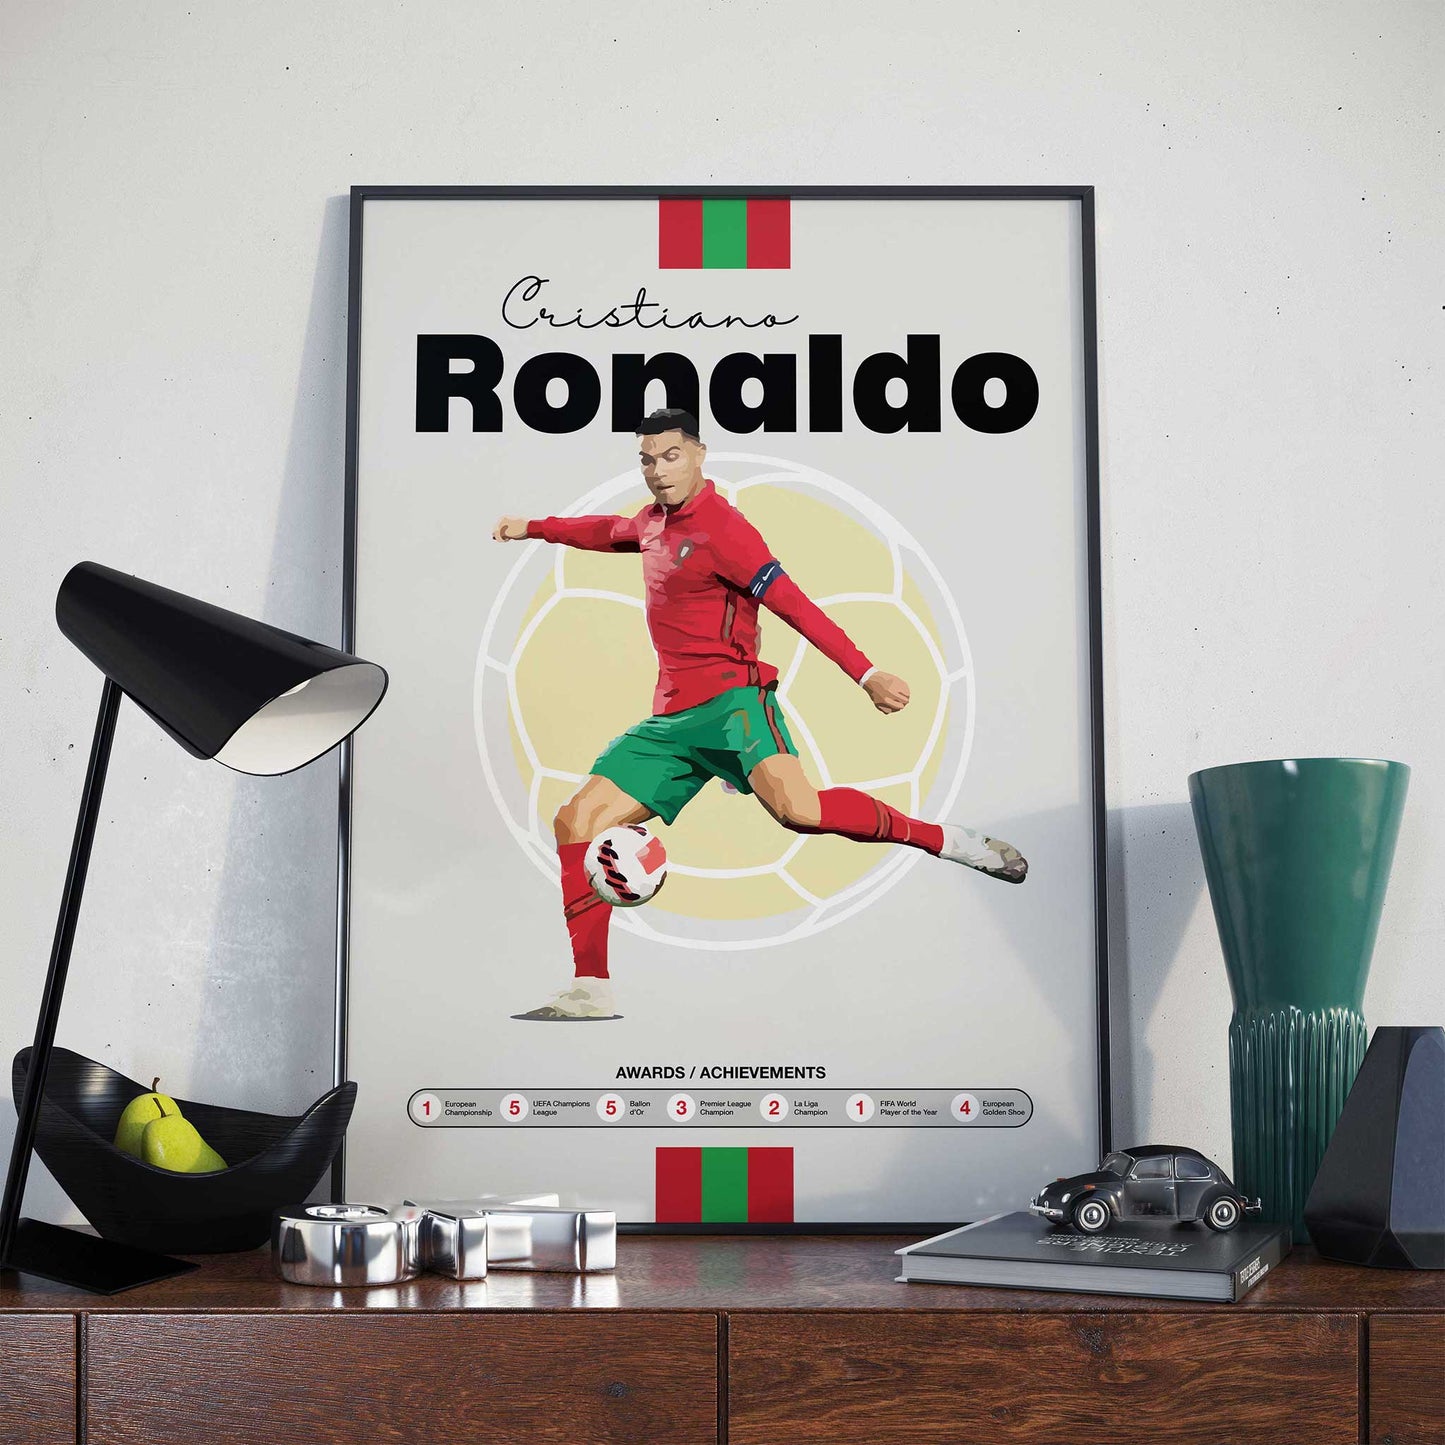 Cristiano Ronaldo - Legendary Player Profile Football Poster